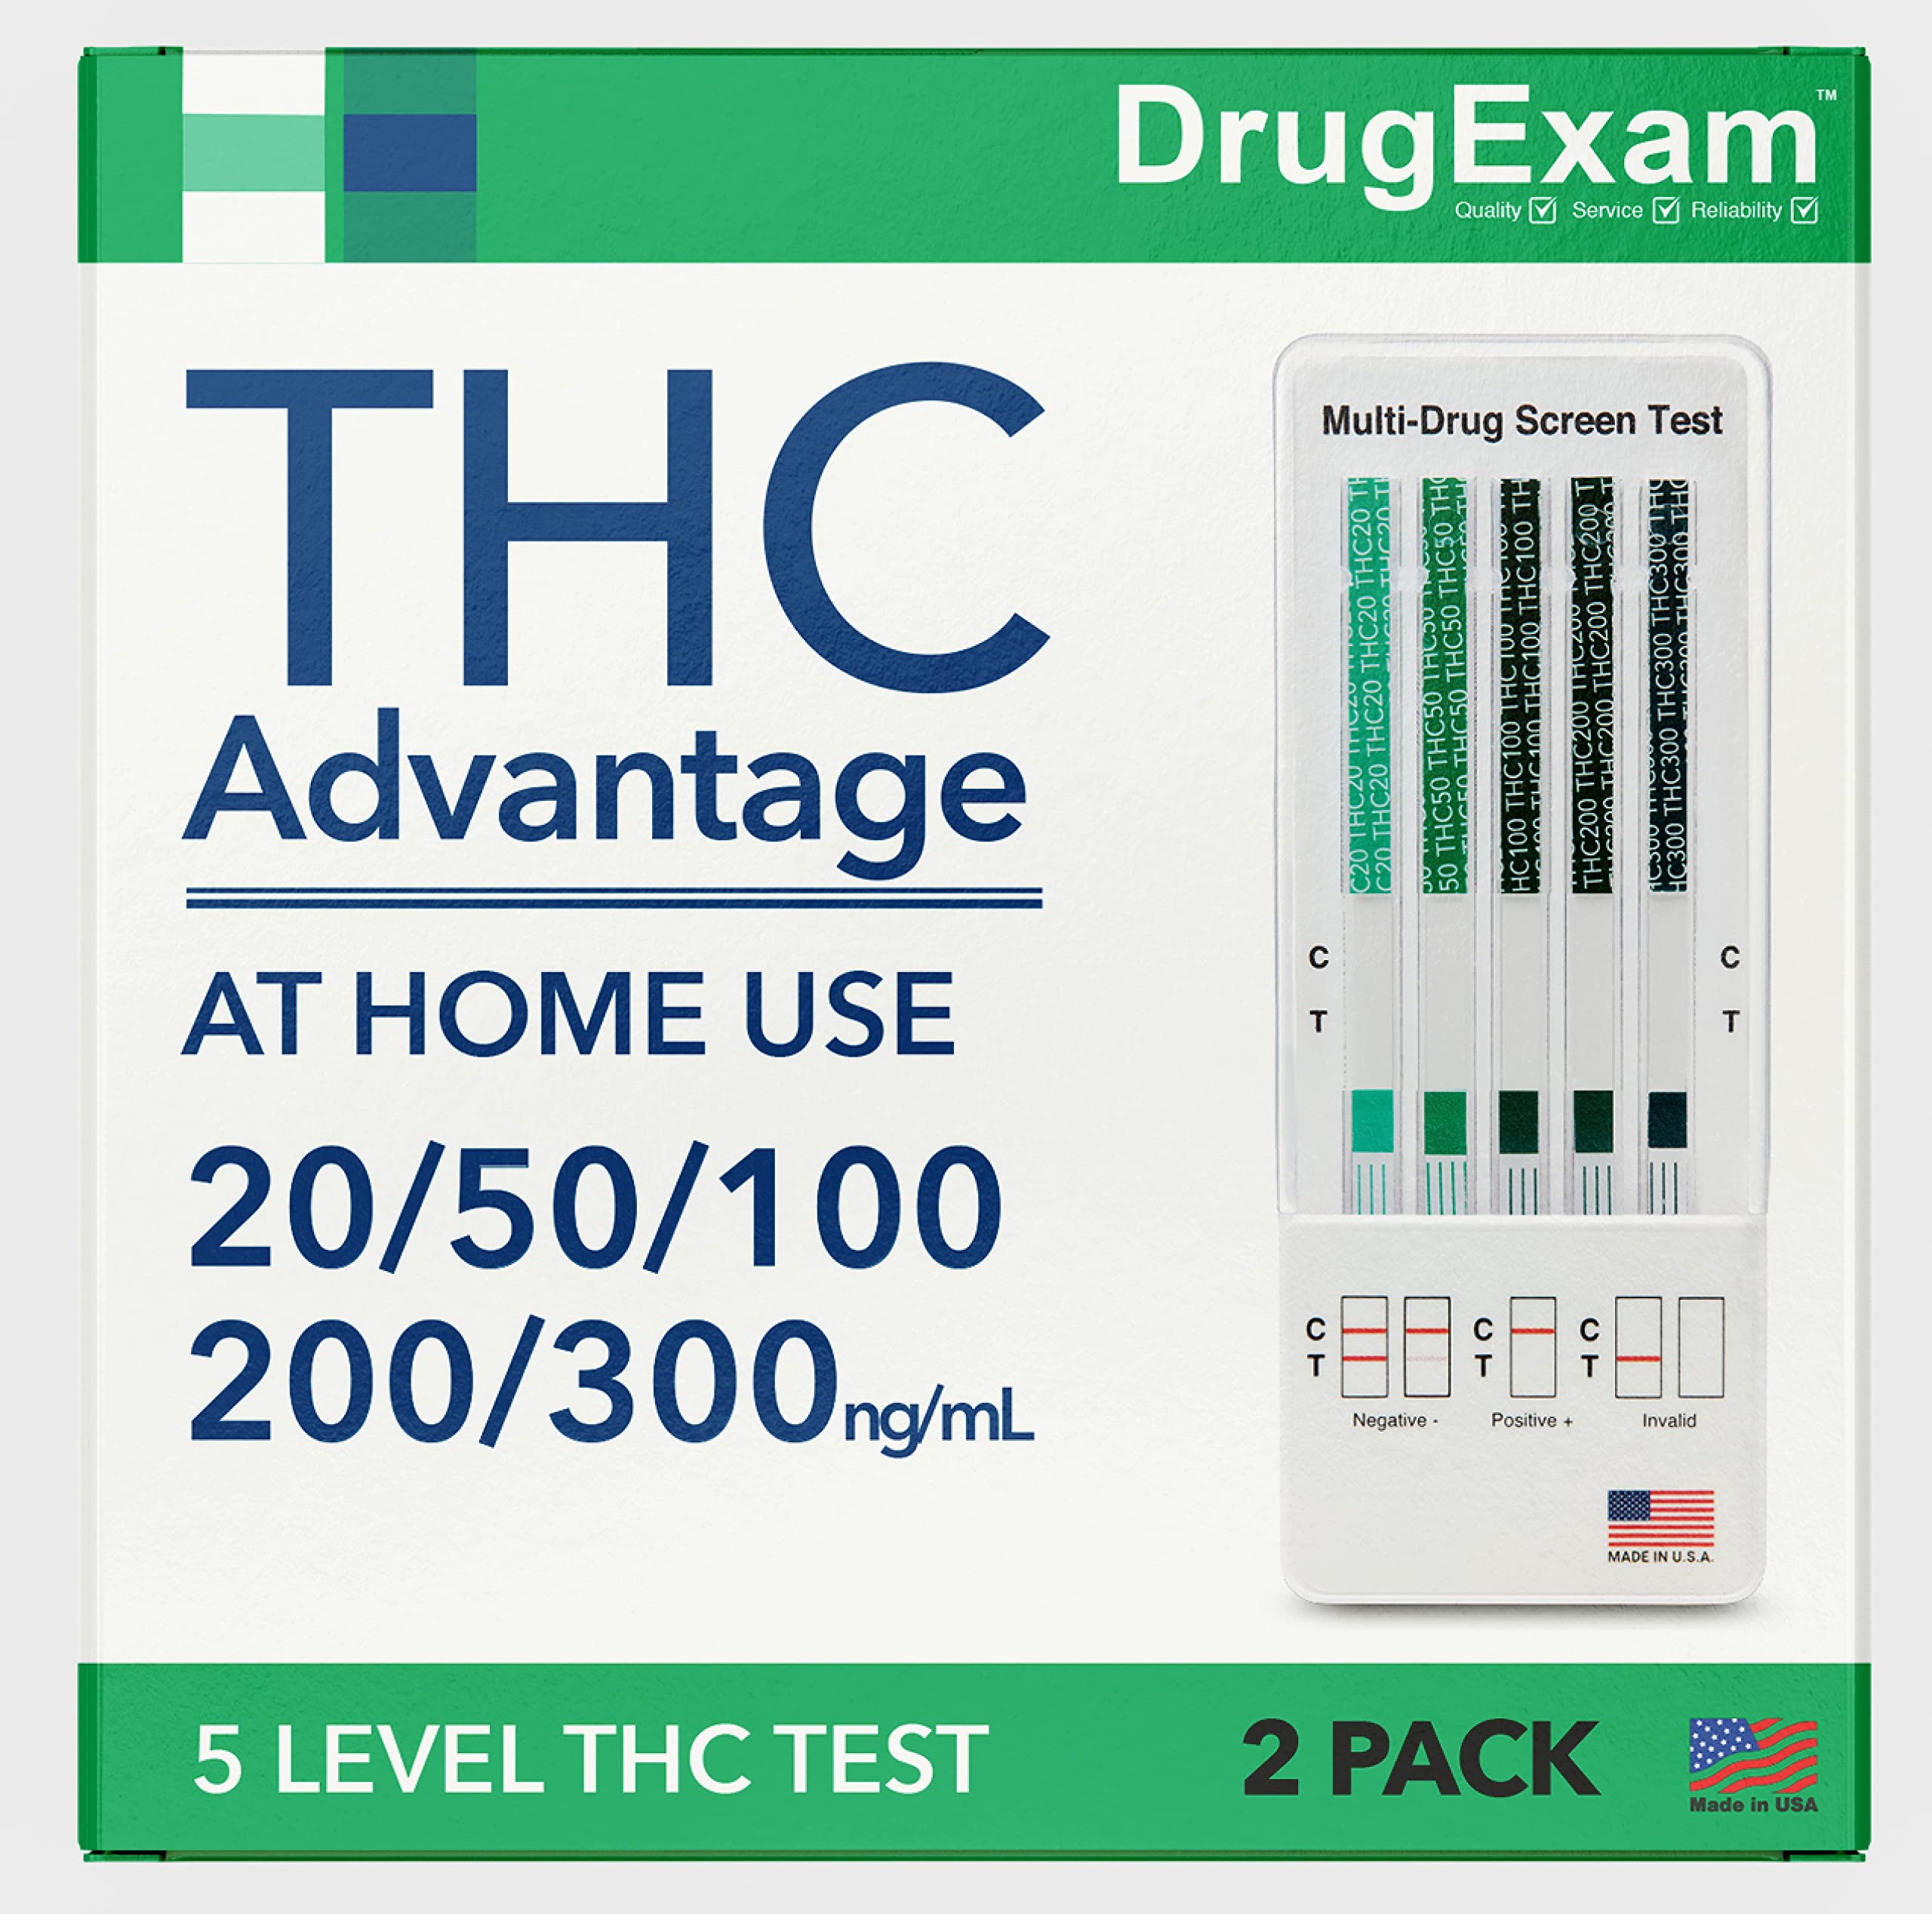 2 Pack - DrugExam THC Advantage Made in USA Multi Level Marijuana